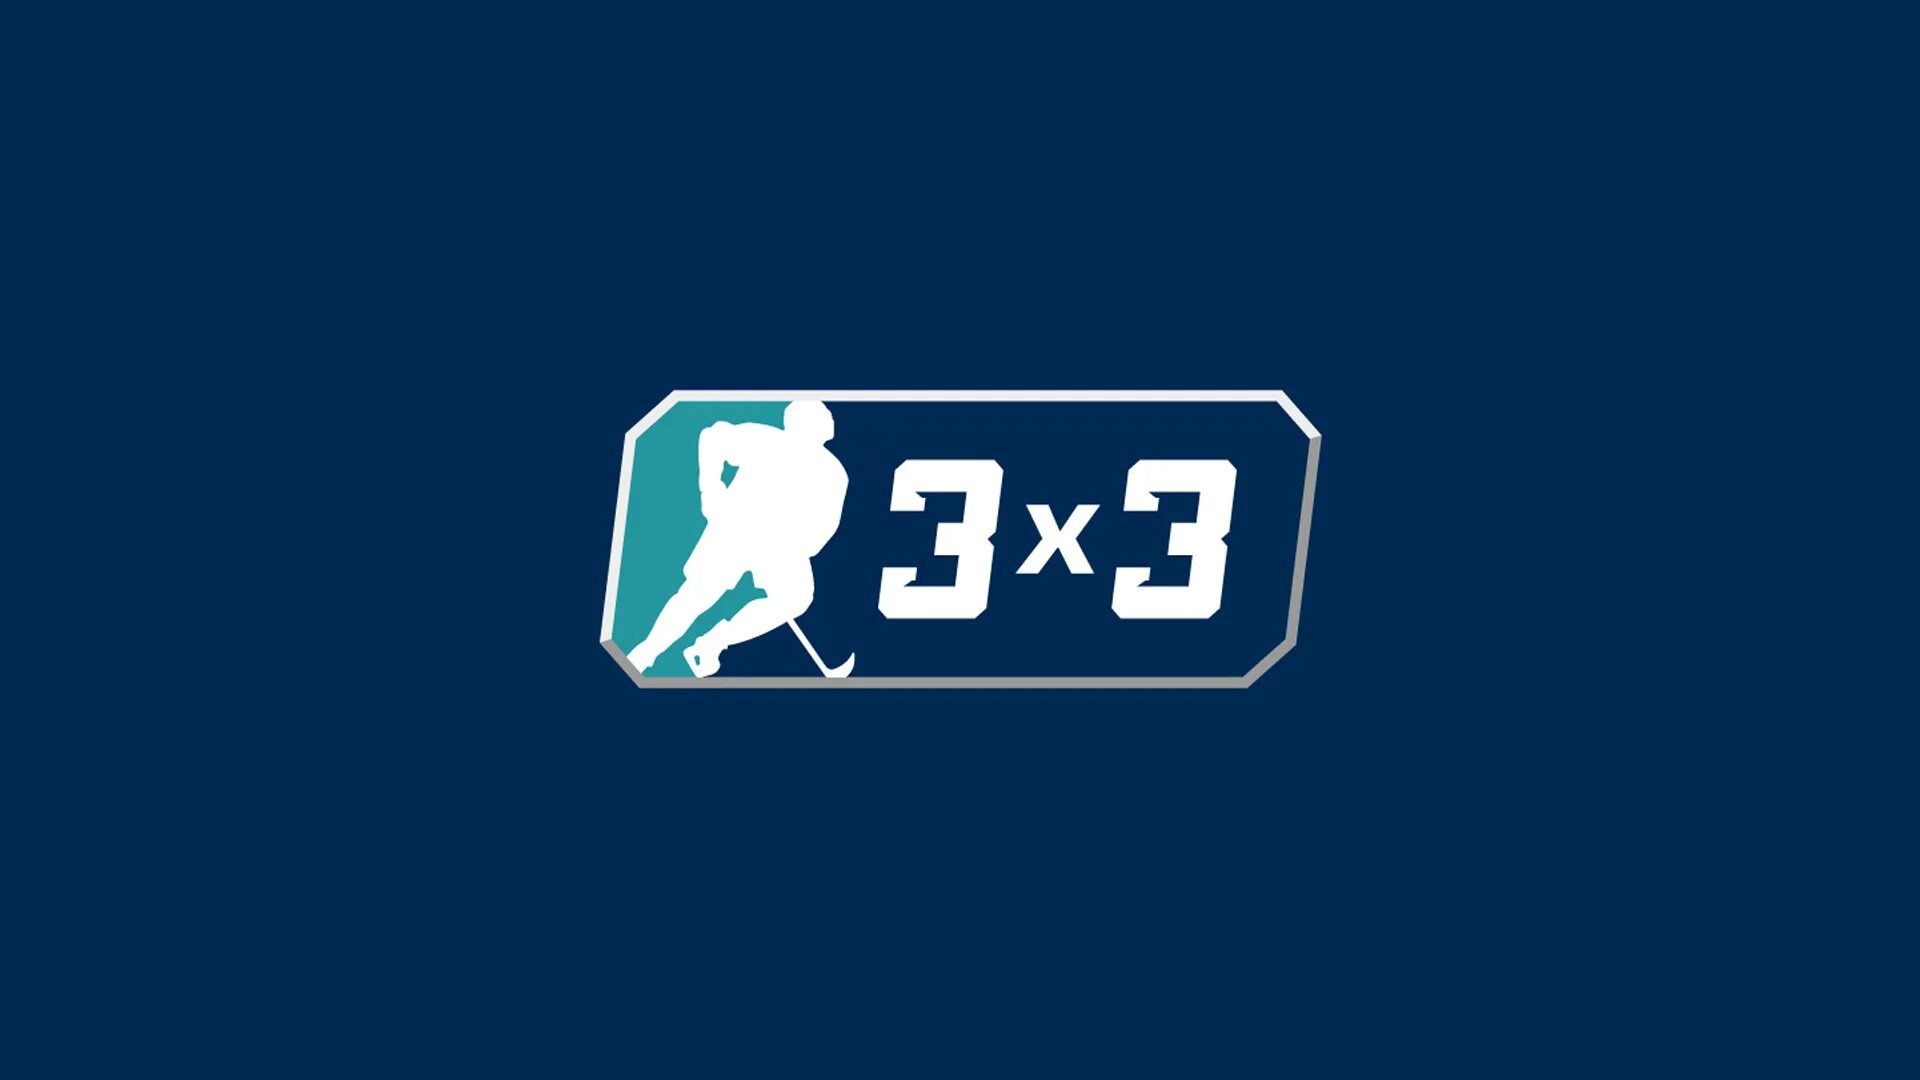 Хоккей логотип. Хоккей 3х3. Турнир 3х3 хоккей. Турнир 3х3